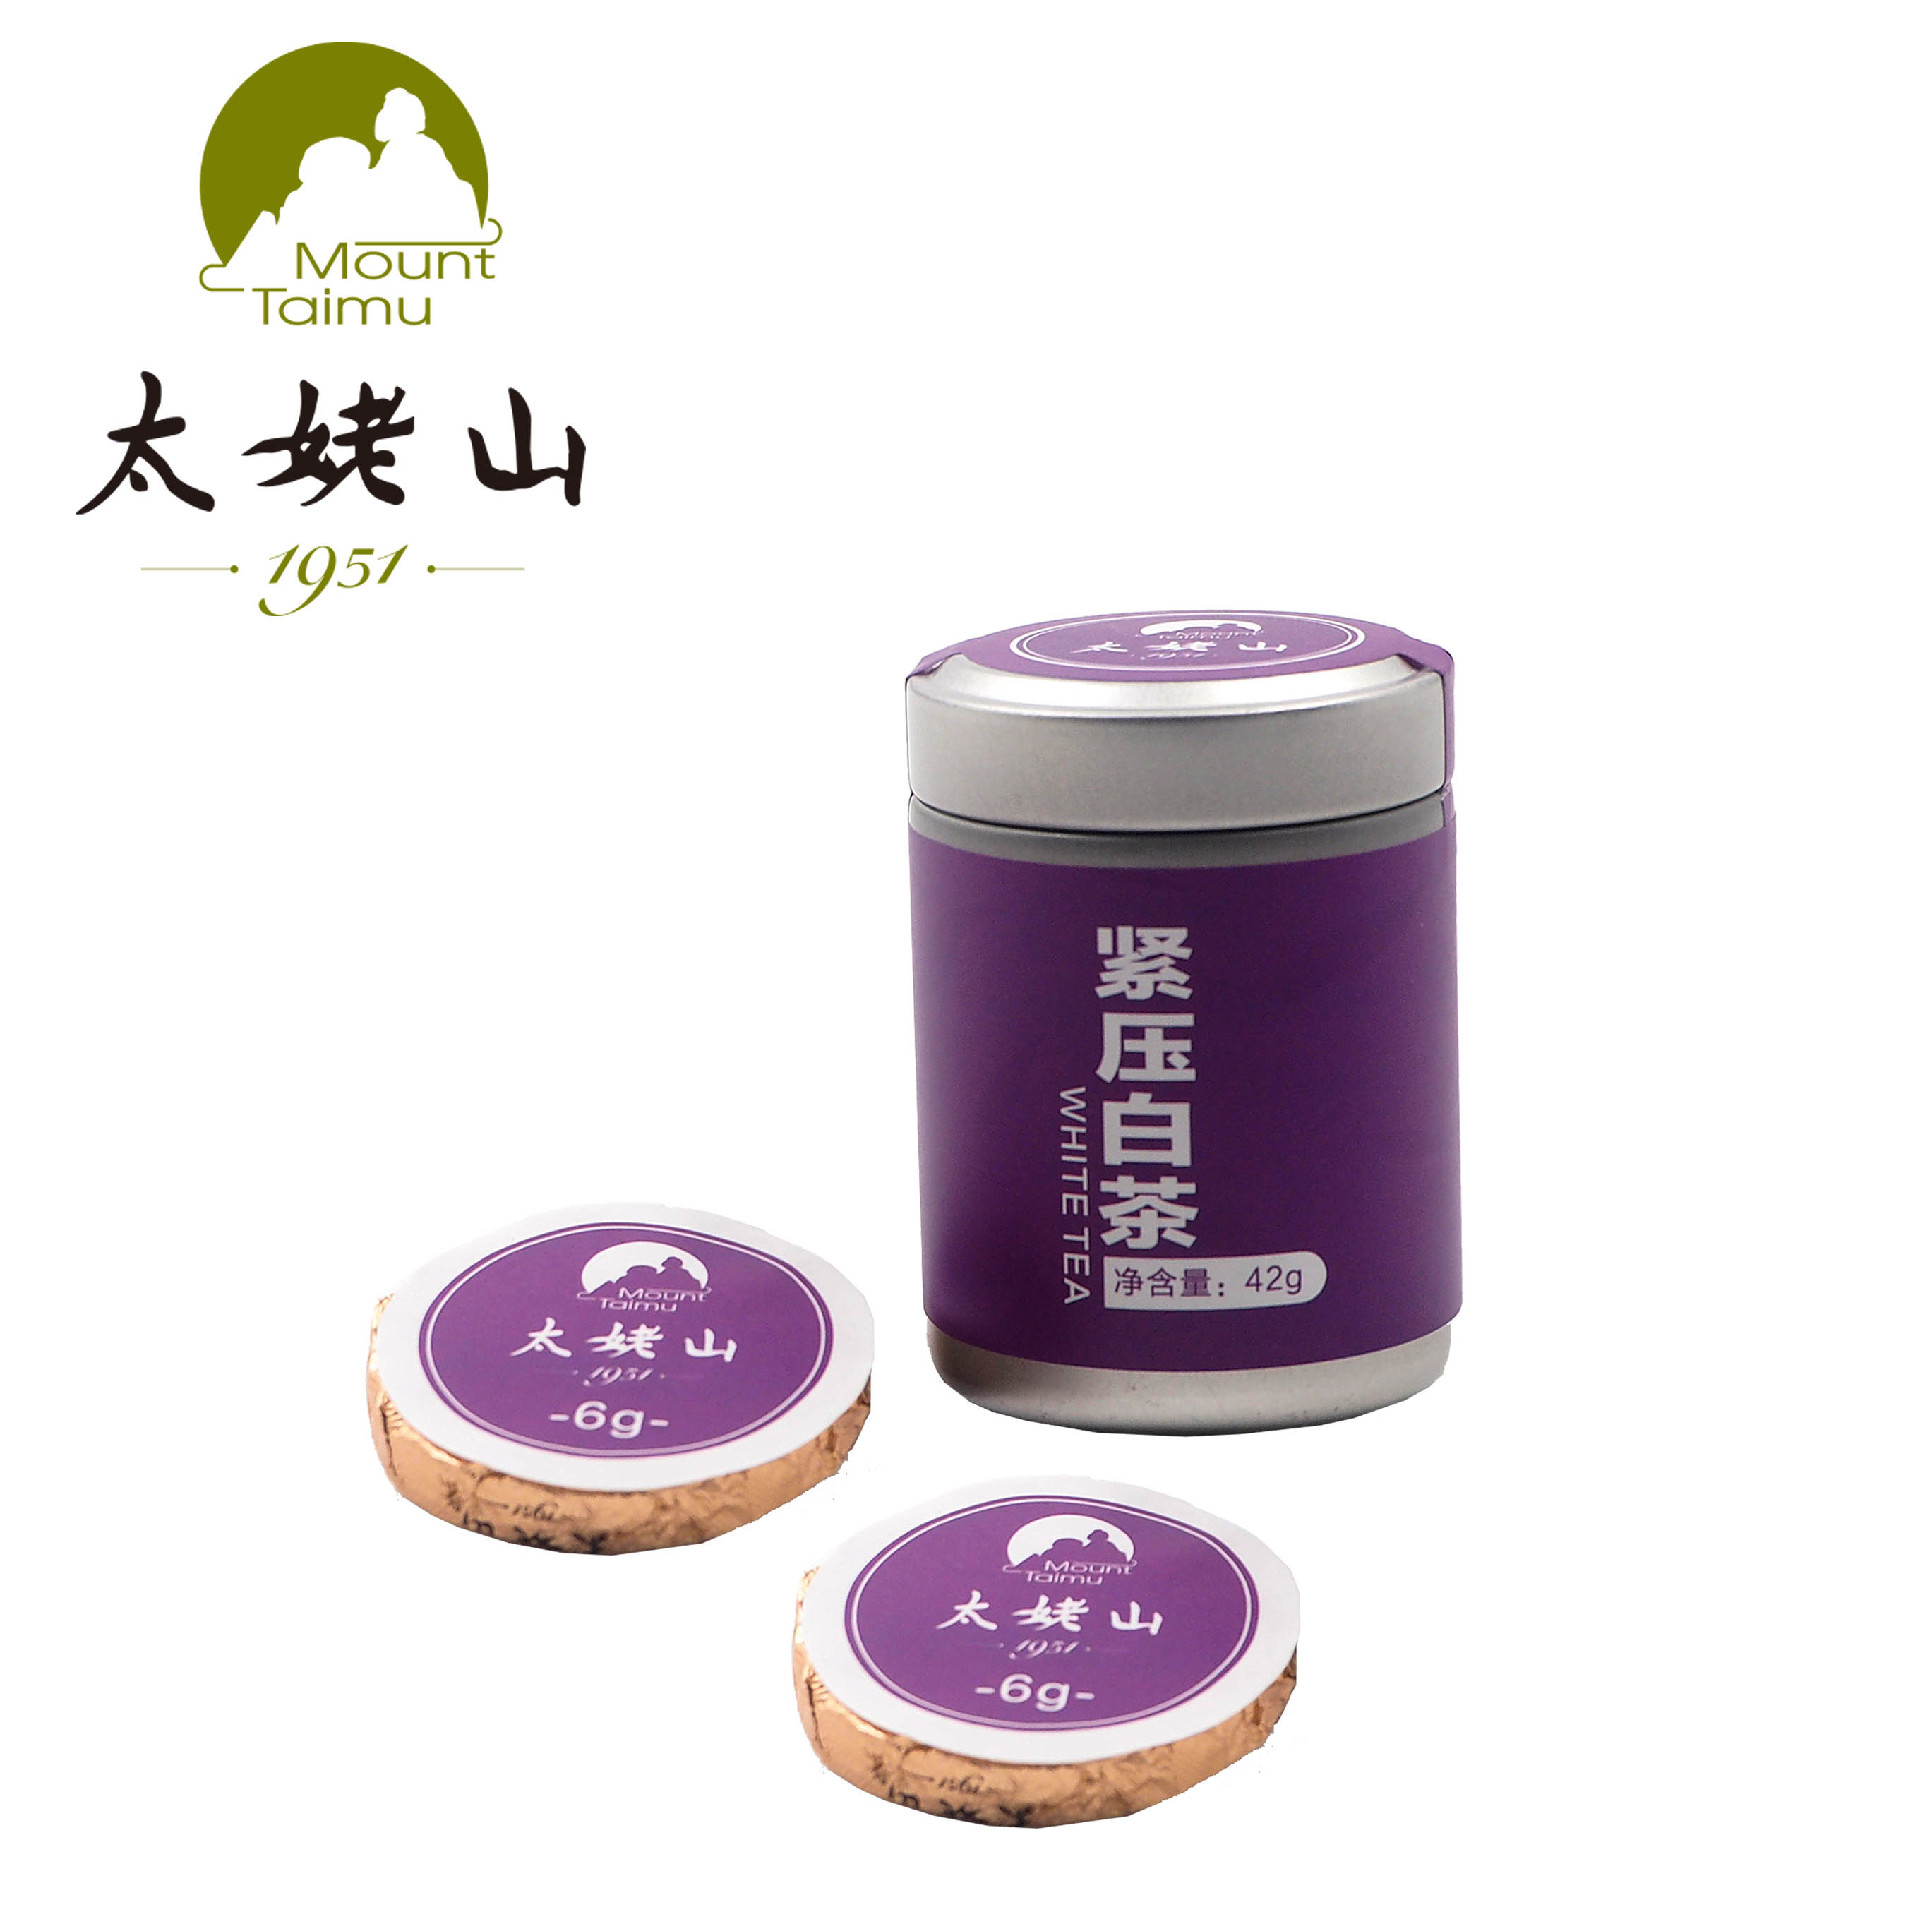 Taimu Mountain Tea Fuding White Tea Alpine Old Shoumei Office Travel Pack 42g Canned